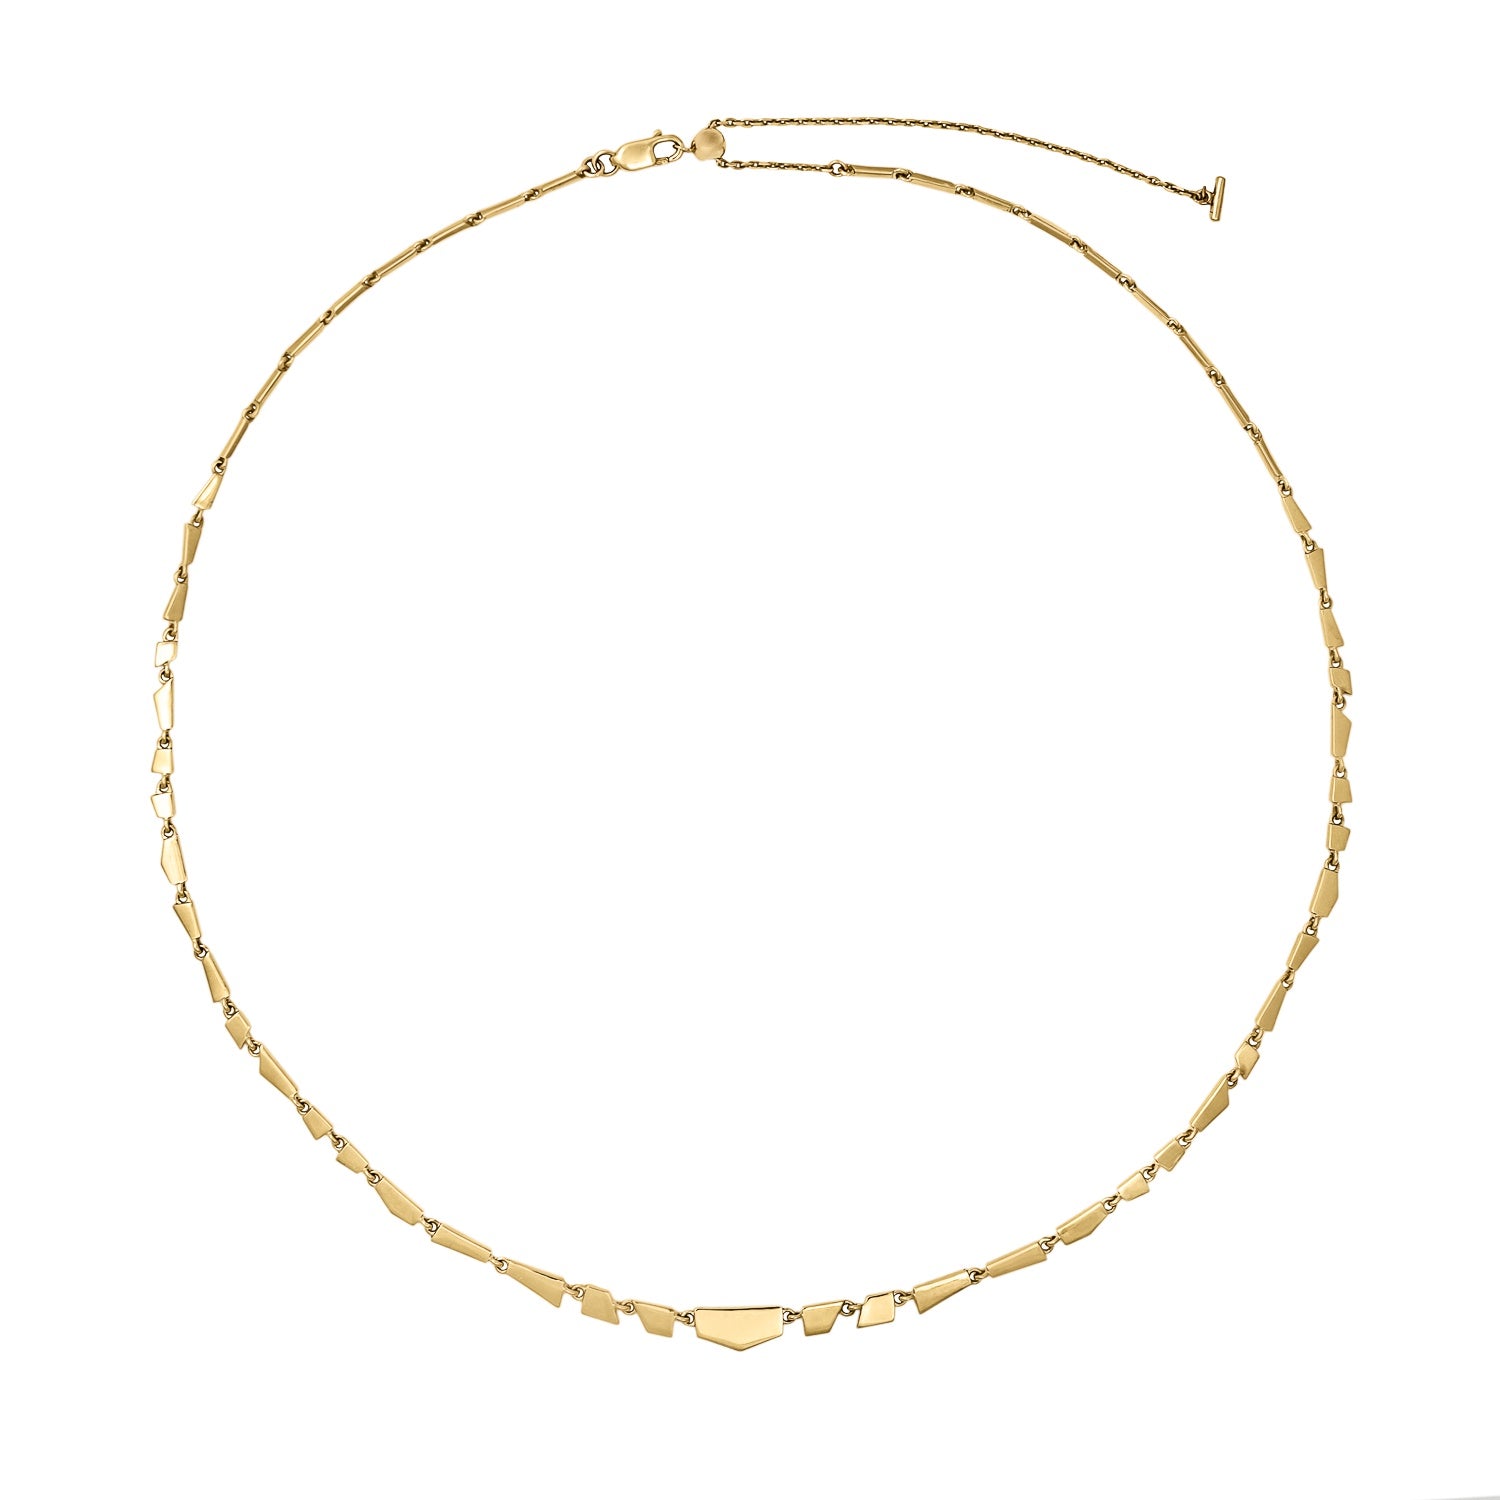 Gold Tesserae Necklace